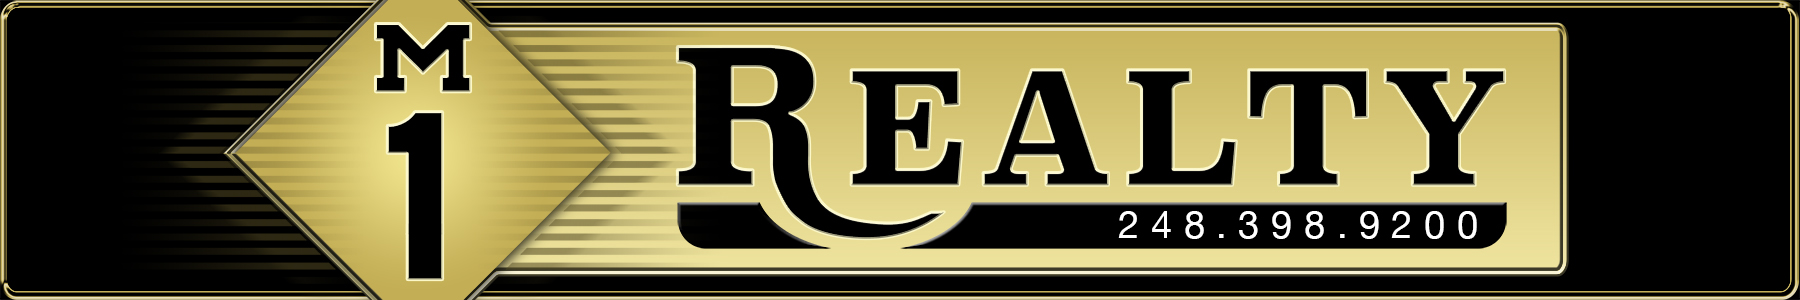 Logo of M 1 Realty, Inc